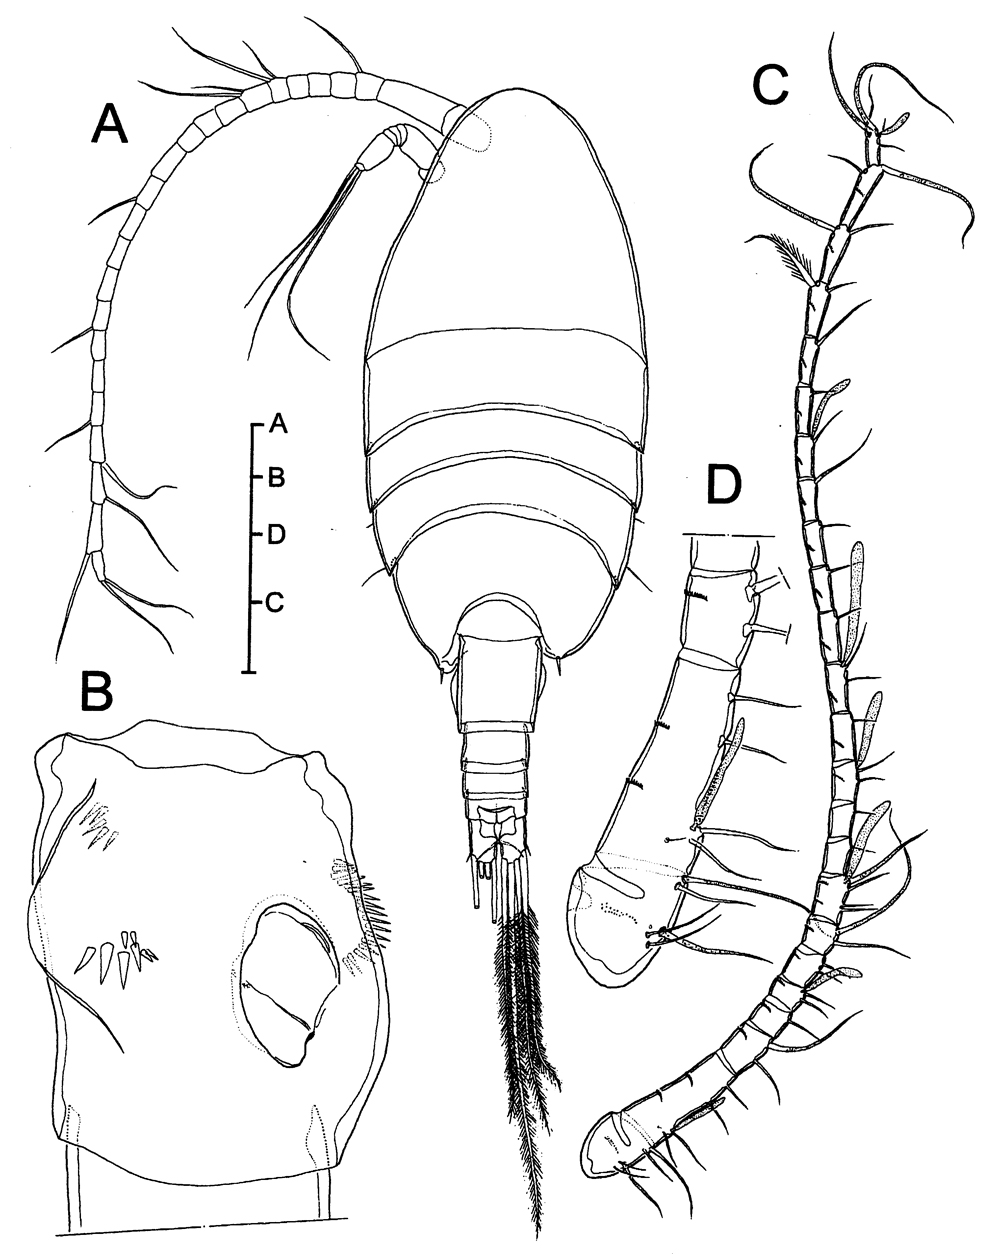 Species Stephos margalefi - Plate 9 of morphological figures